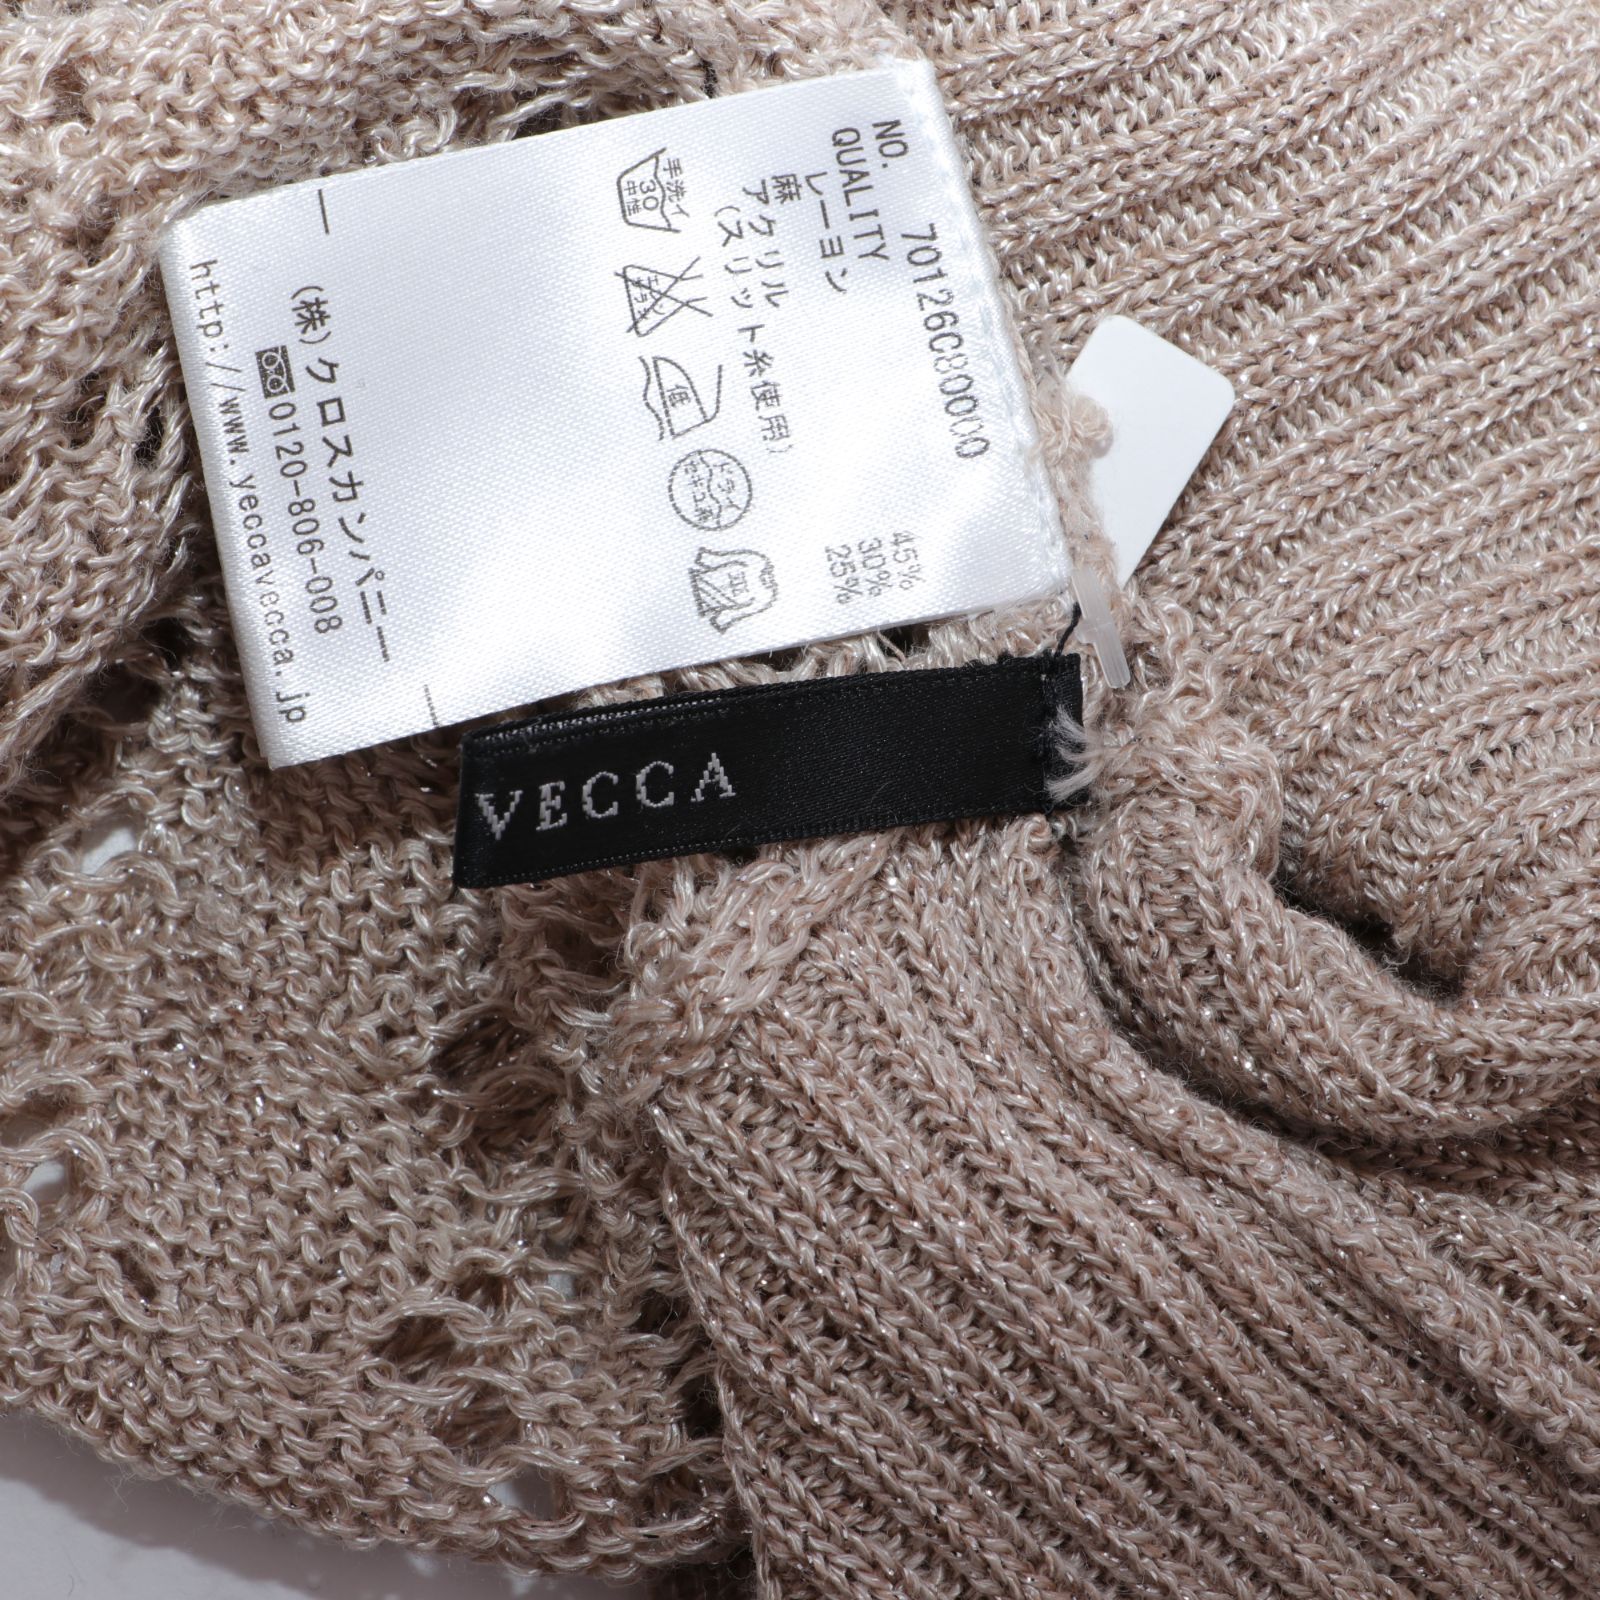 SKT20】 YECCA VECCA かぎ針編みニット（ベージュ） 美品 SKファッション メルカリ